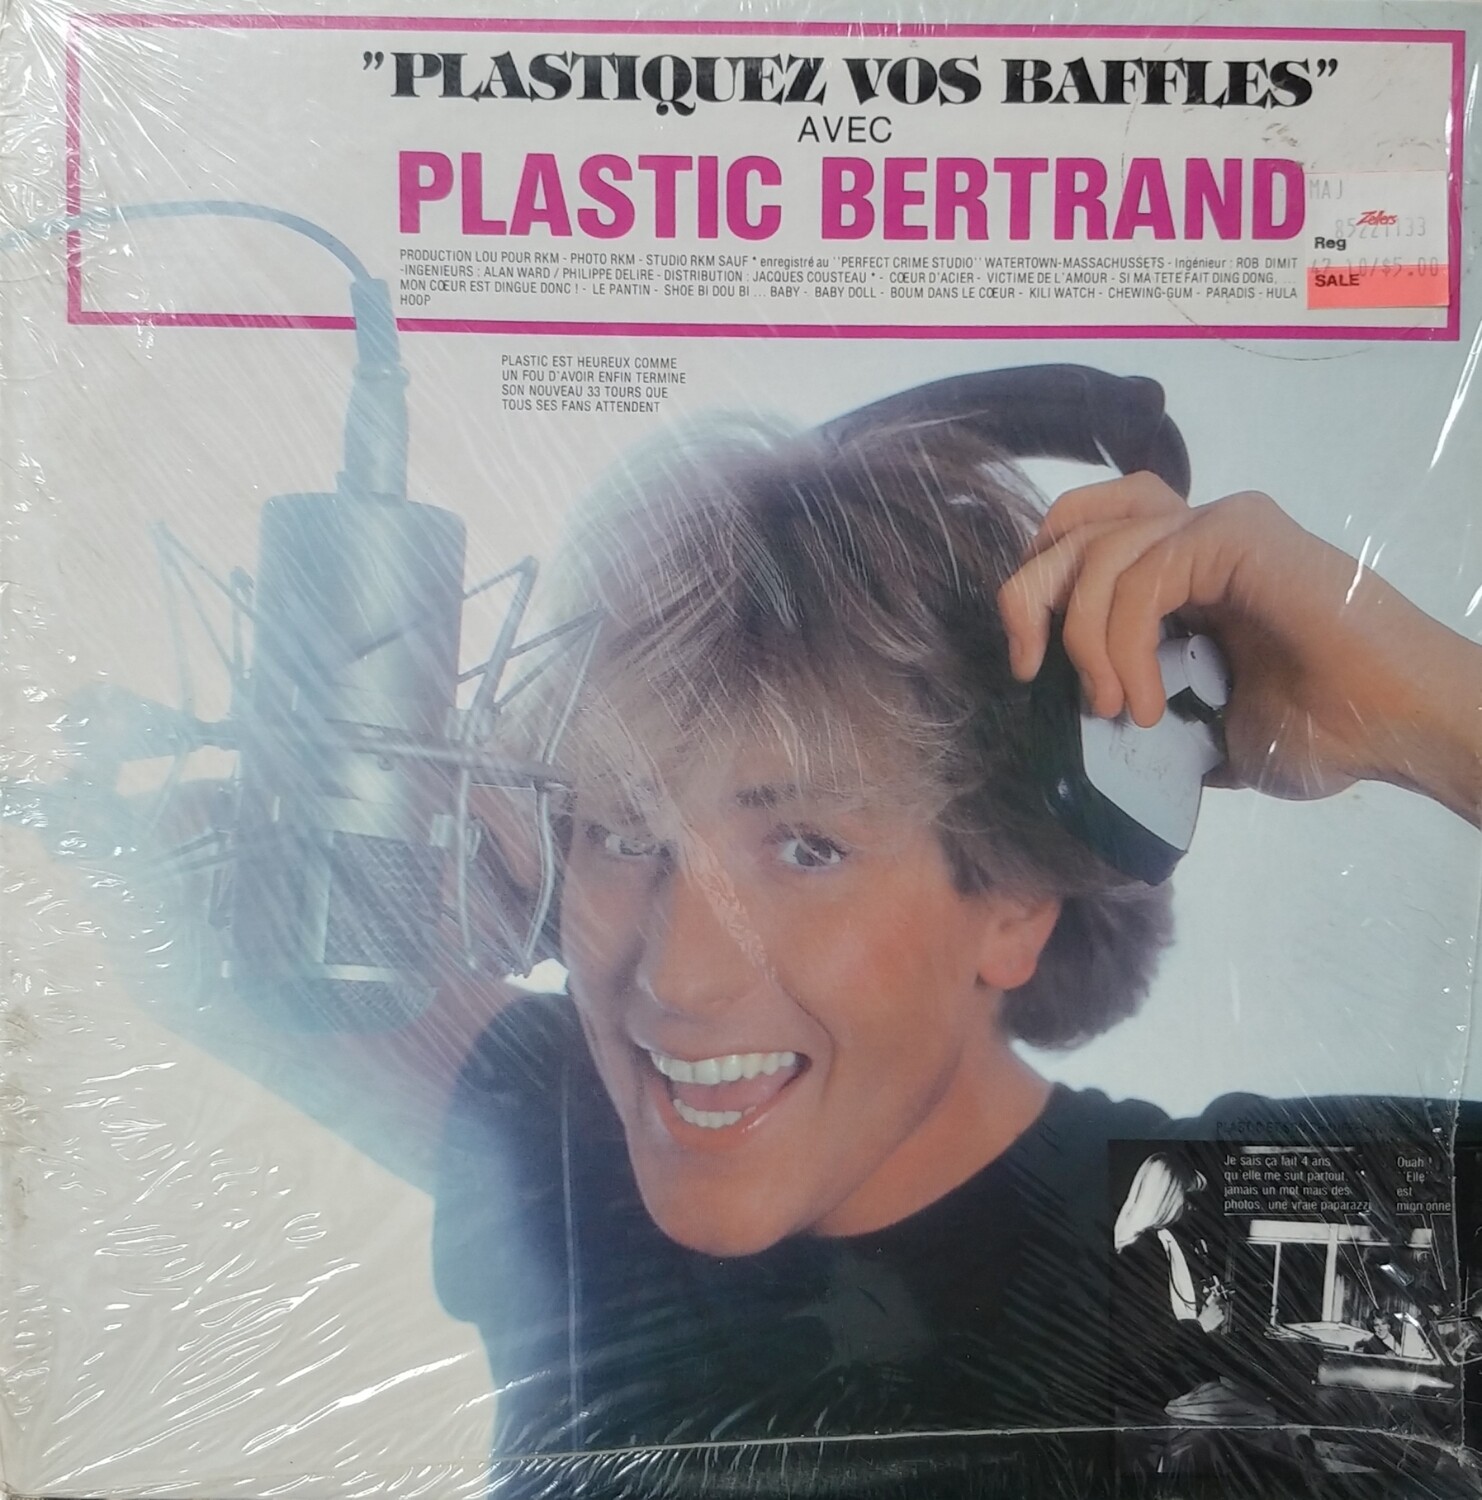 Plastique Bertrand - Plastiquez vos baffles